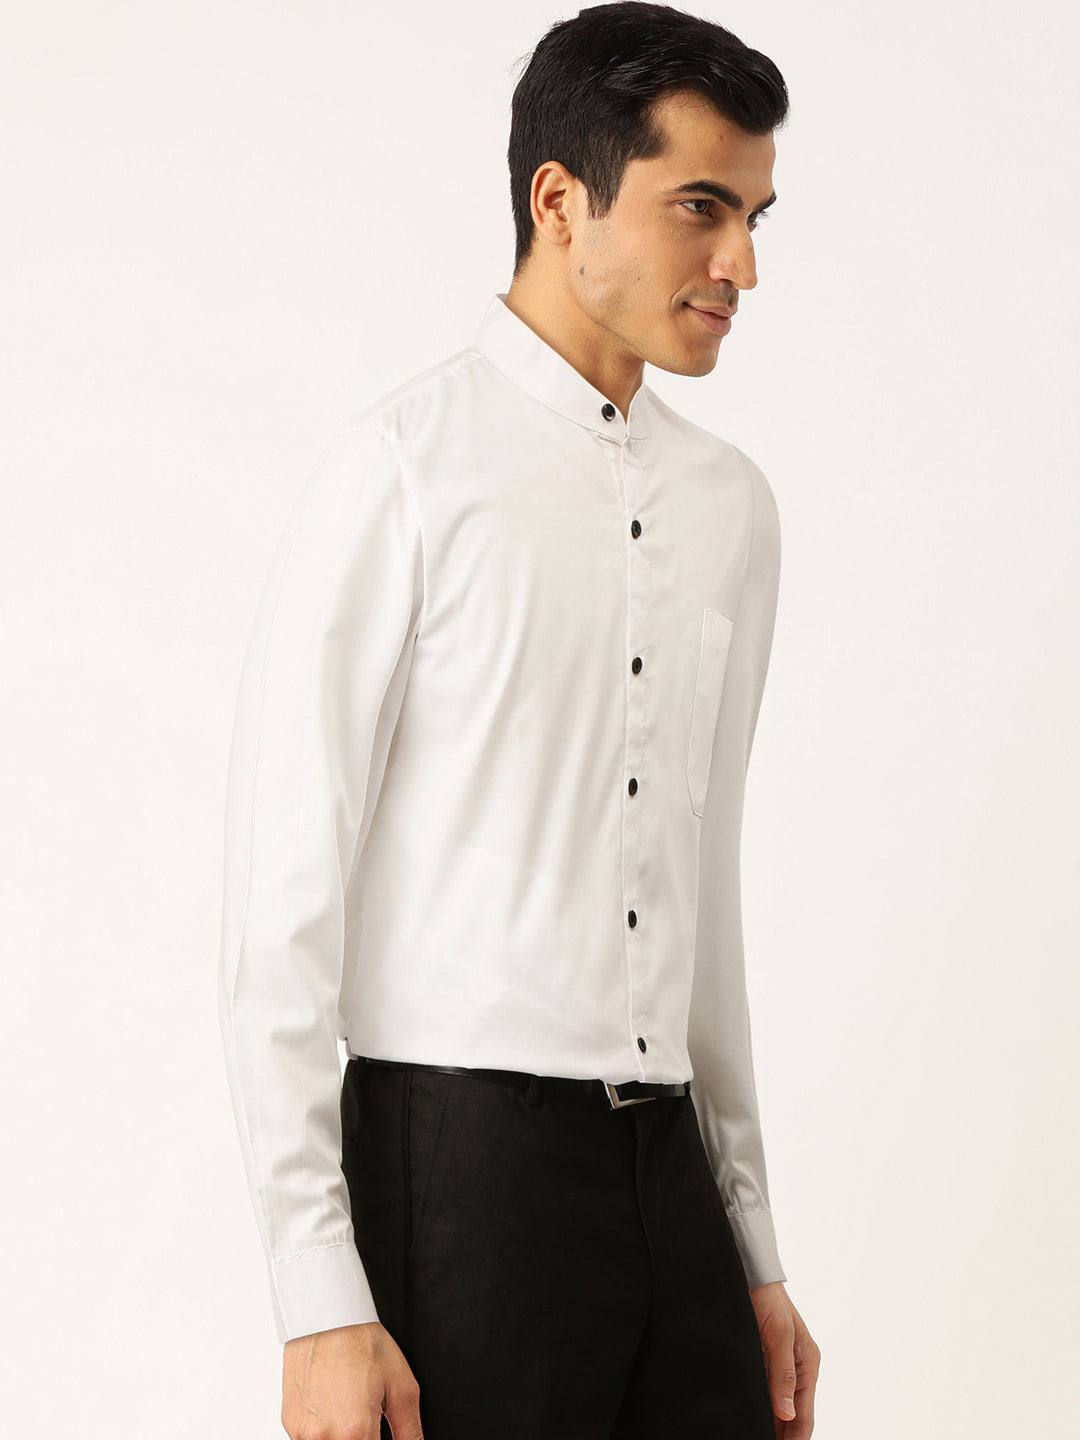 Men's White Cotton Solid Mandarin Collar Formal Shirts ( SF 726White ) - Jainish